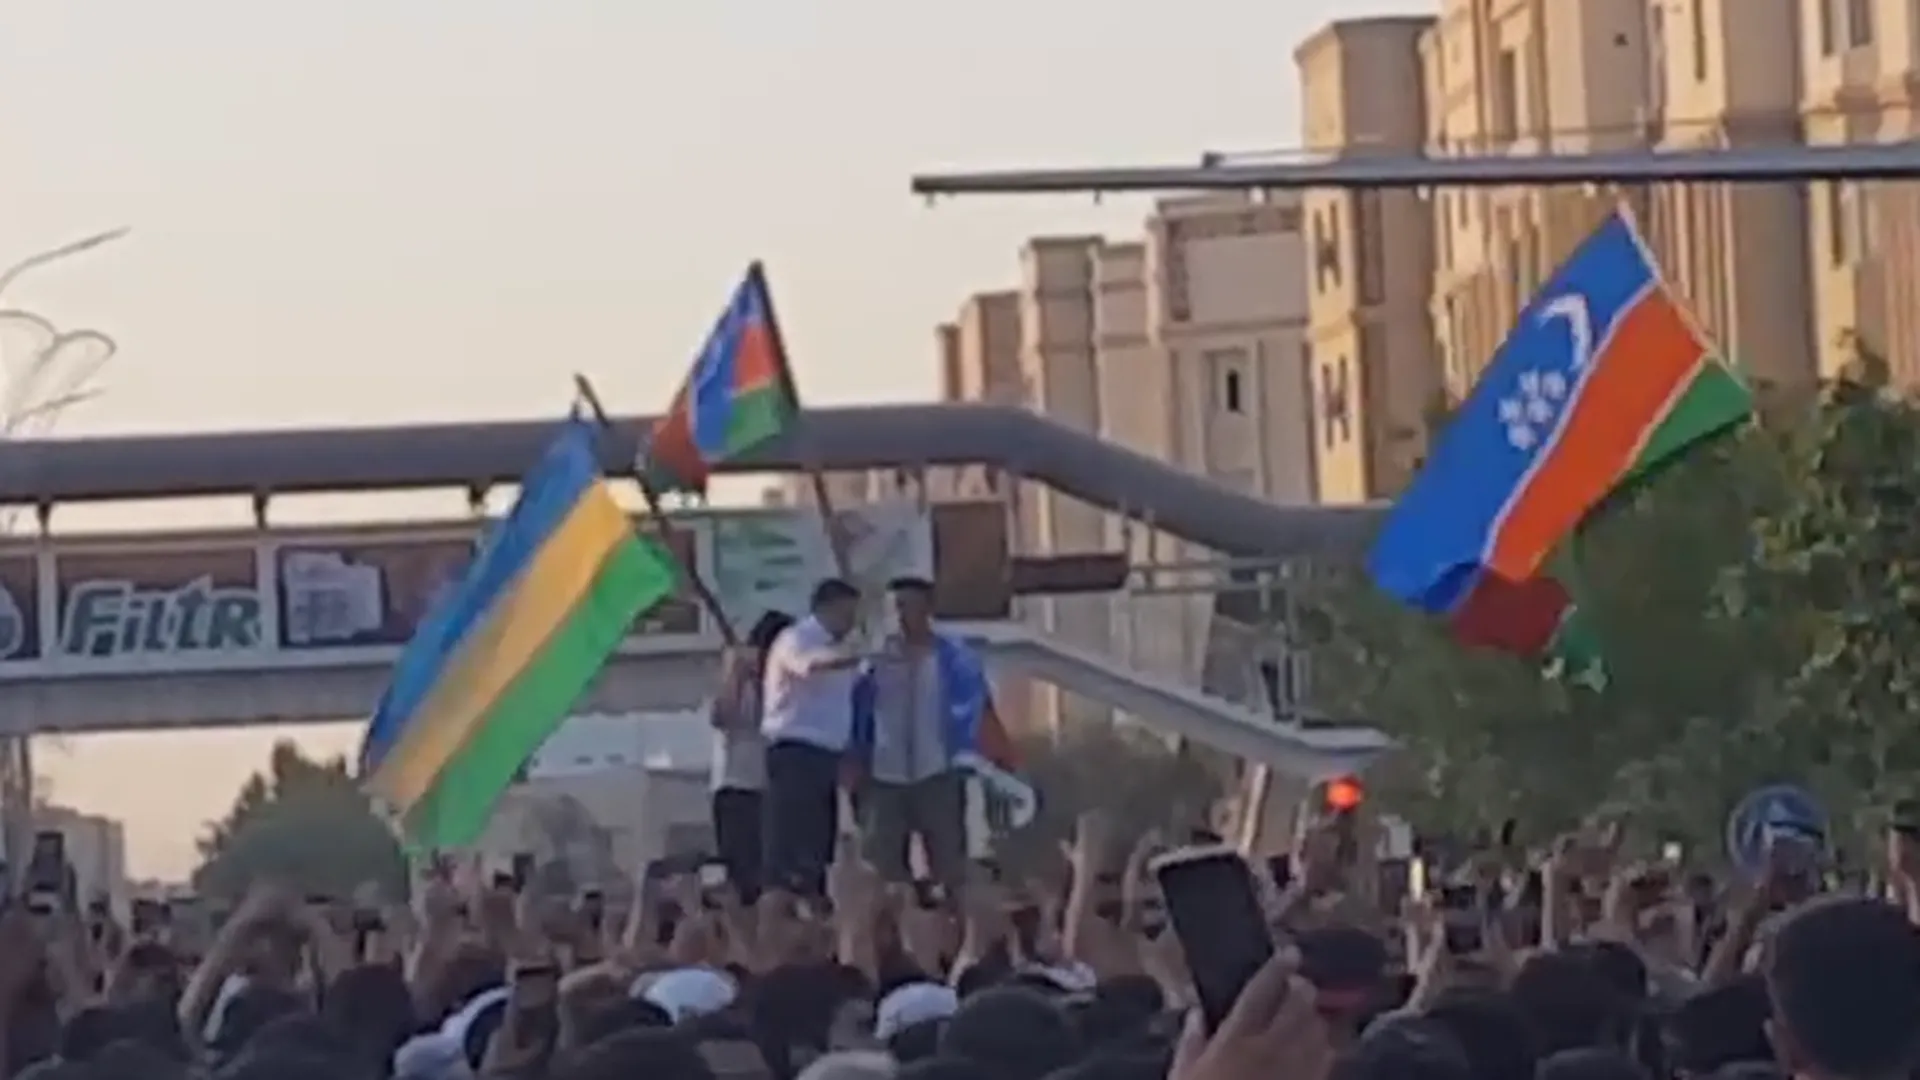 Мини-республика вышла на митинг с требованием независимости от Узбекистана. Видео с места